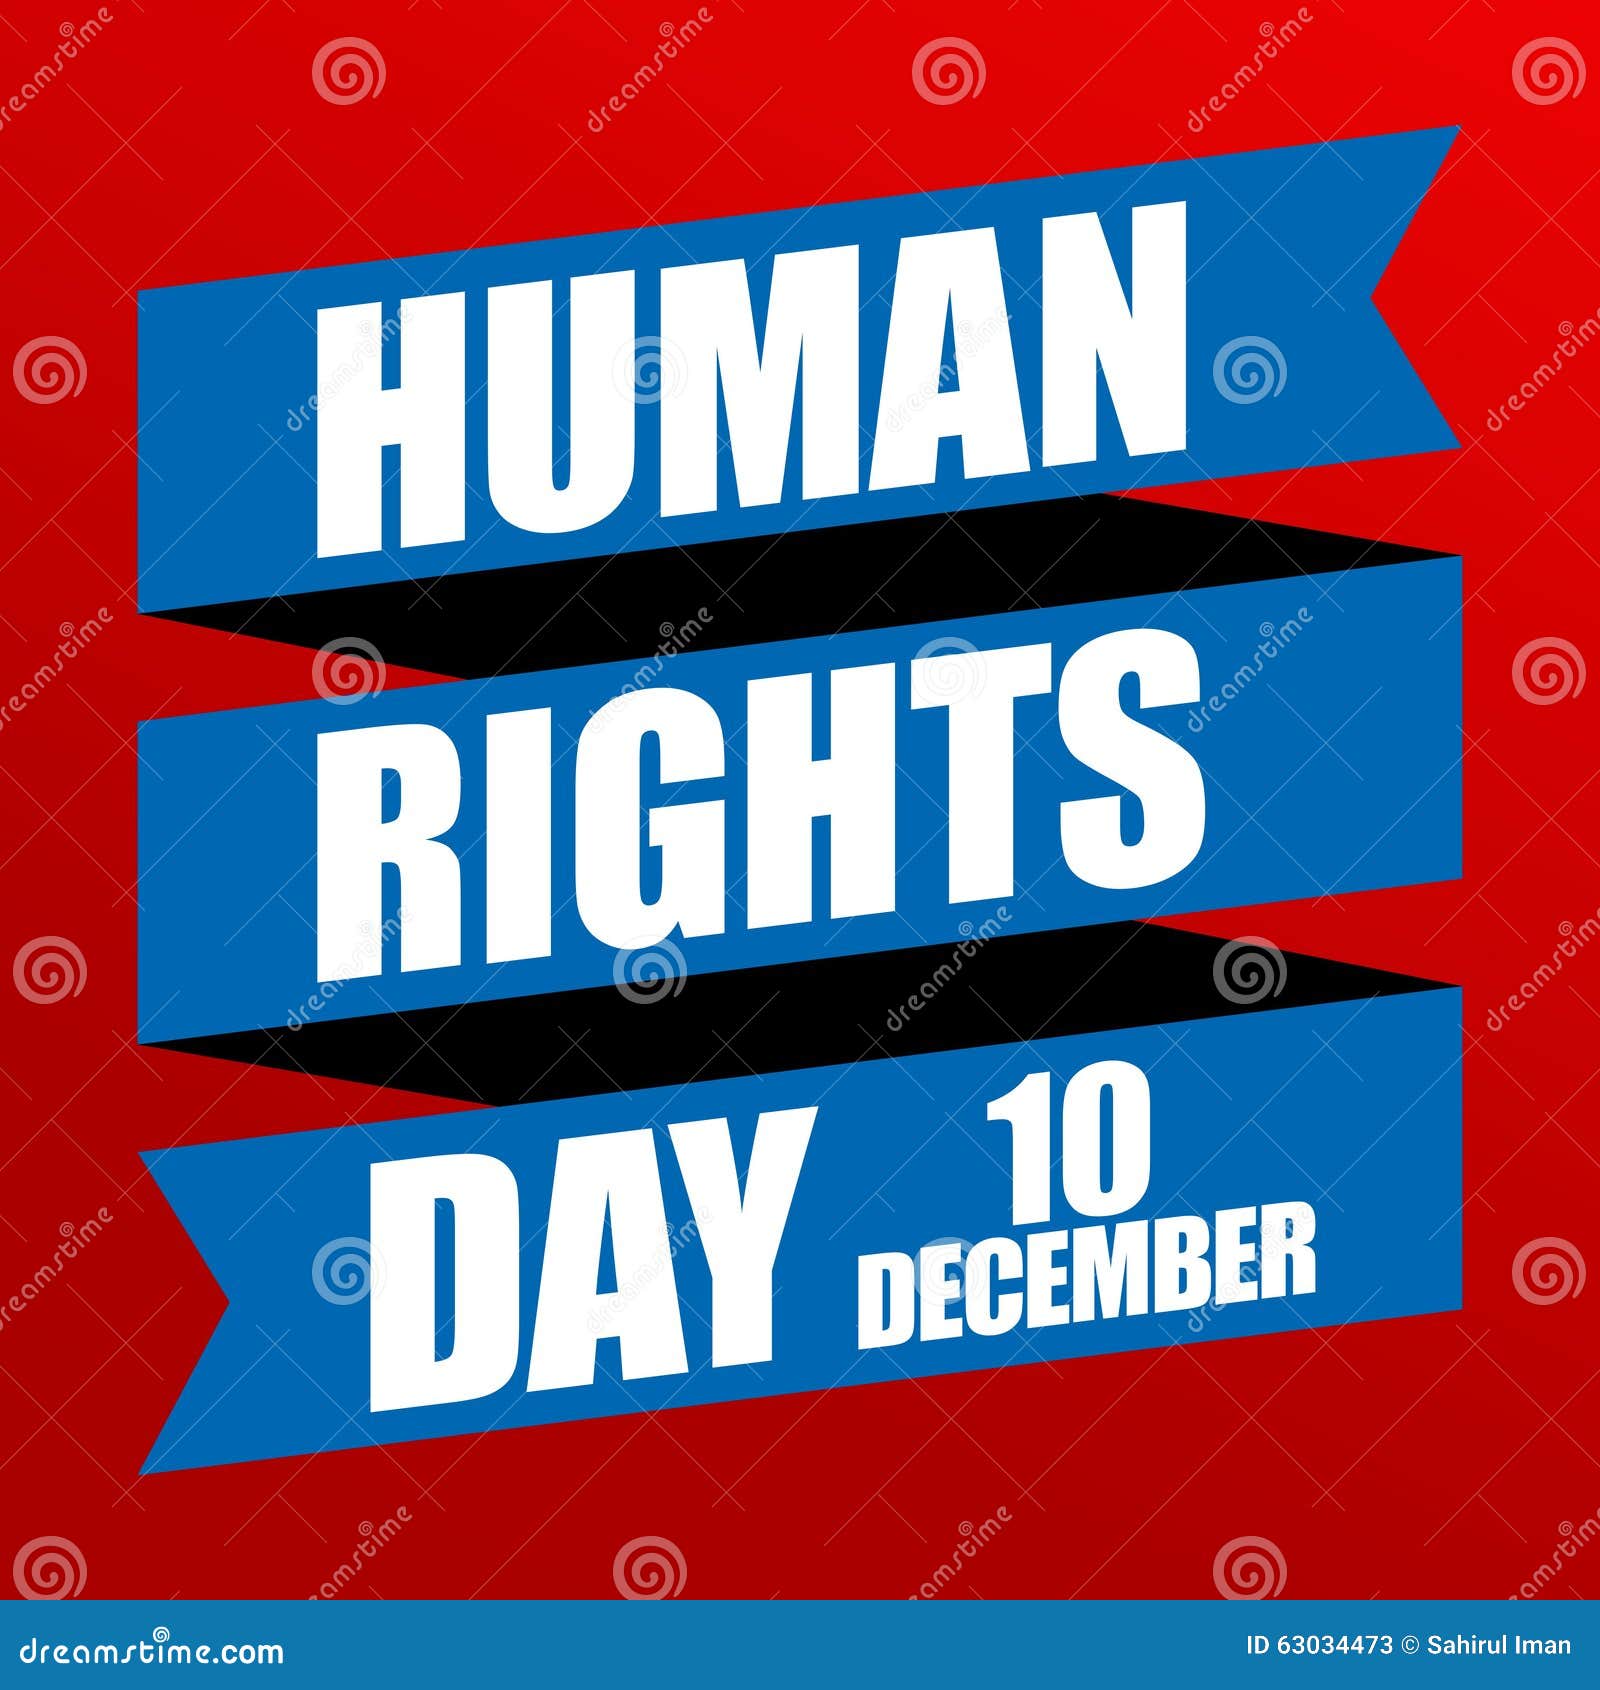 human rights clip art - photo #19